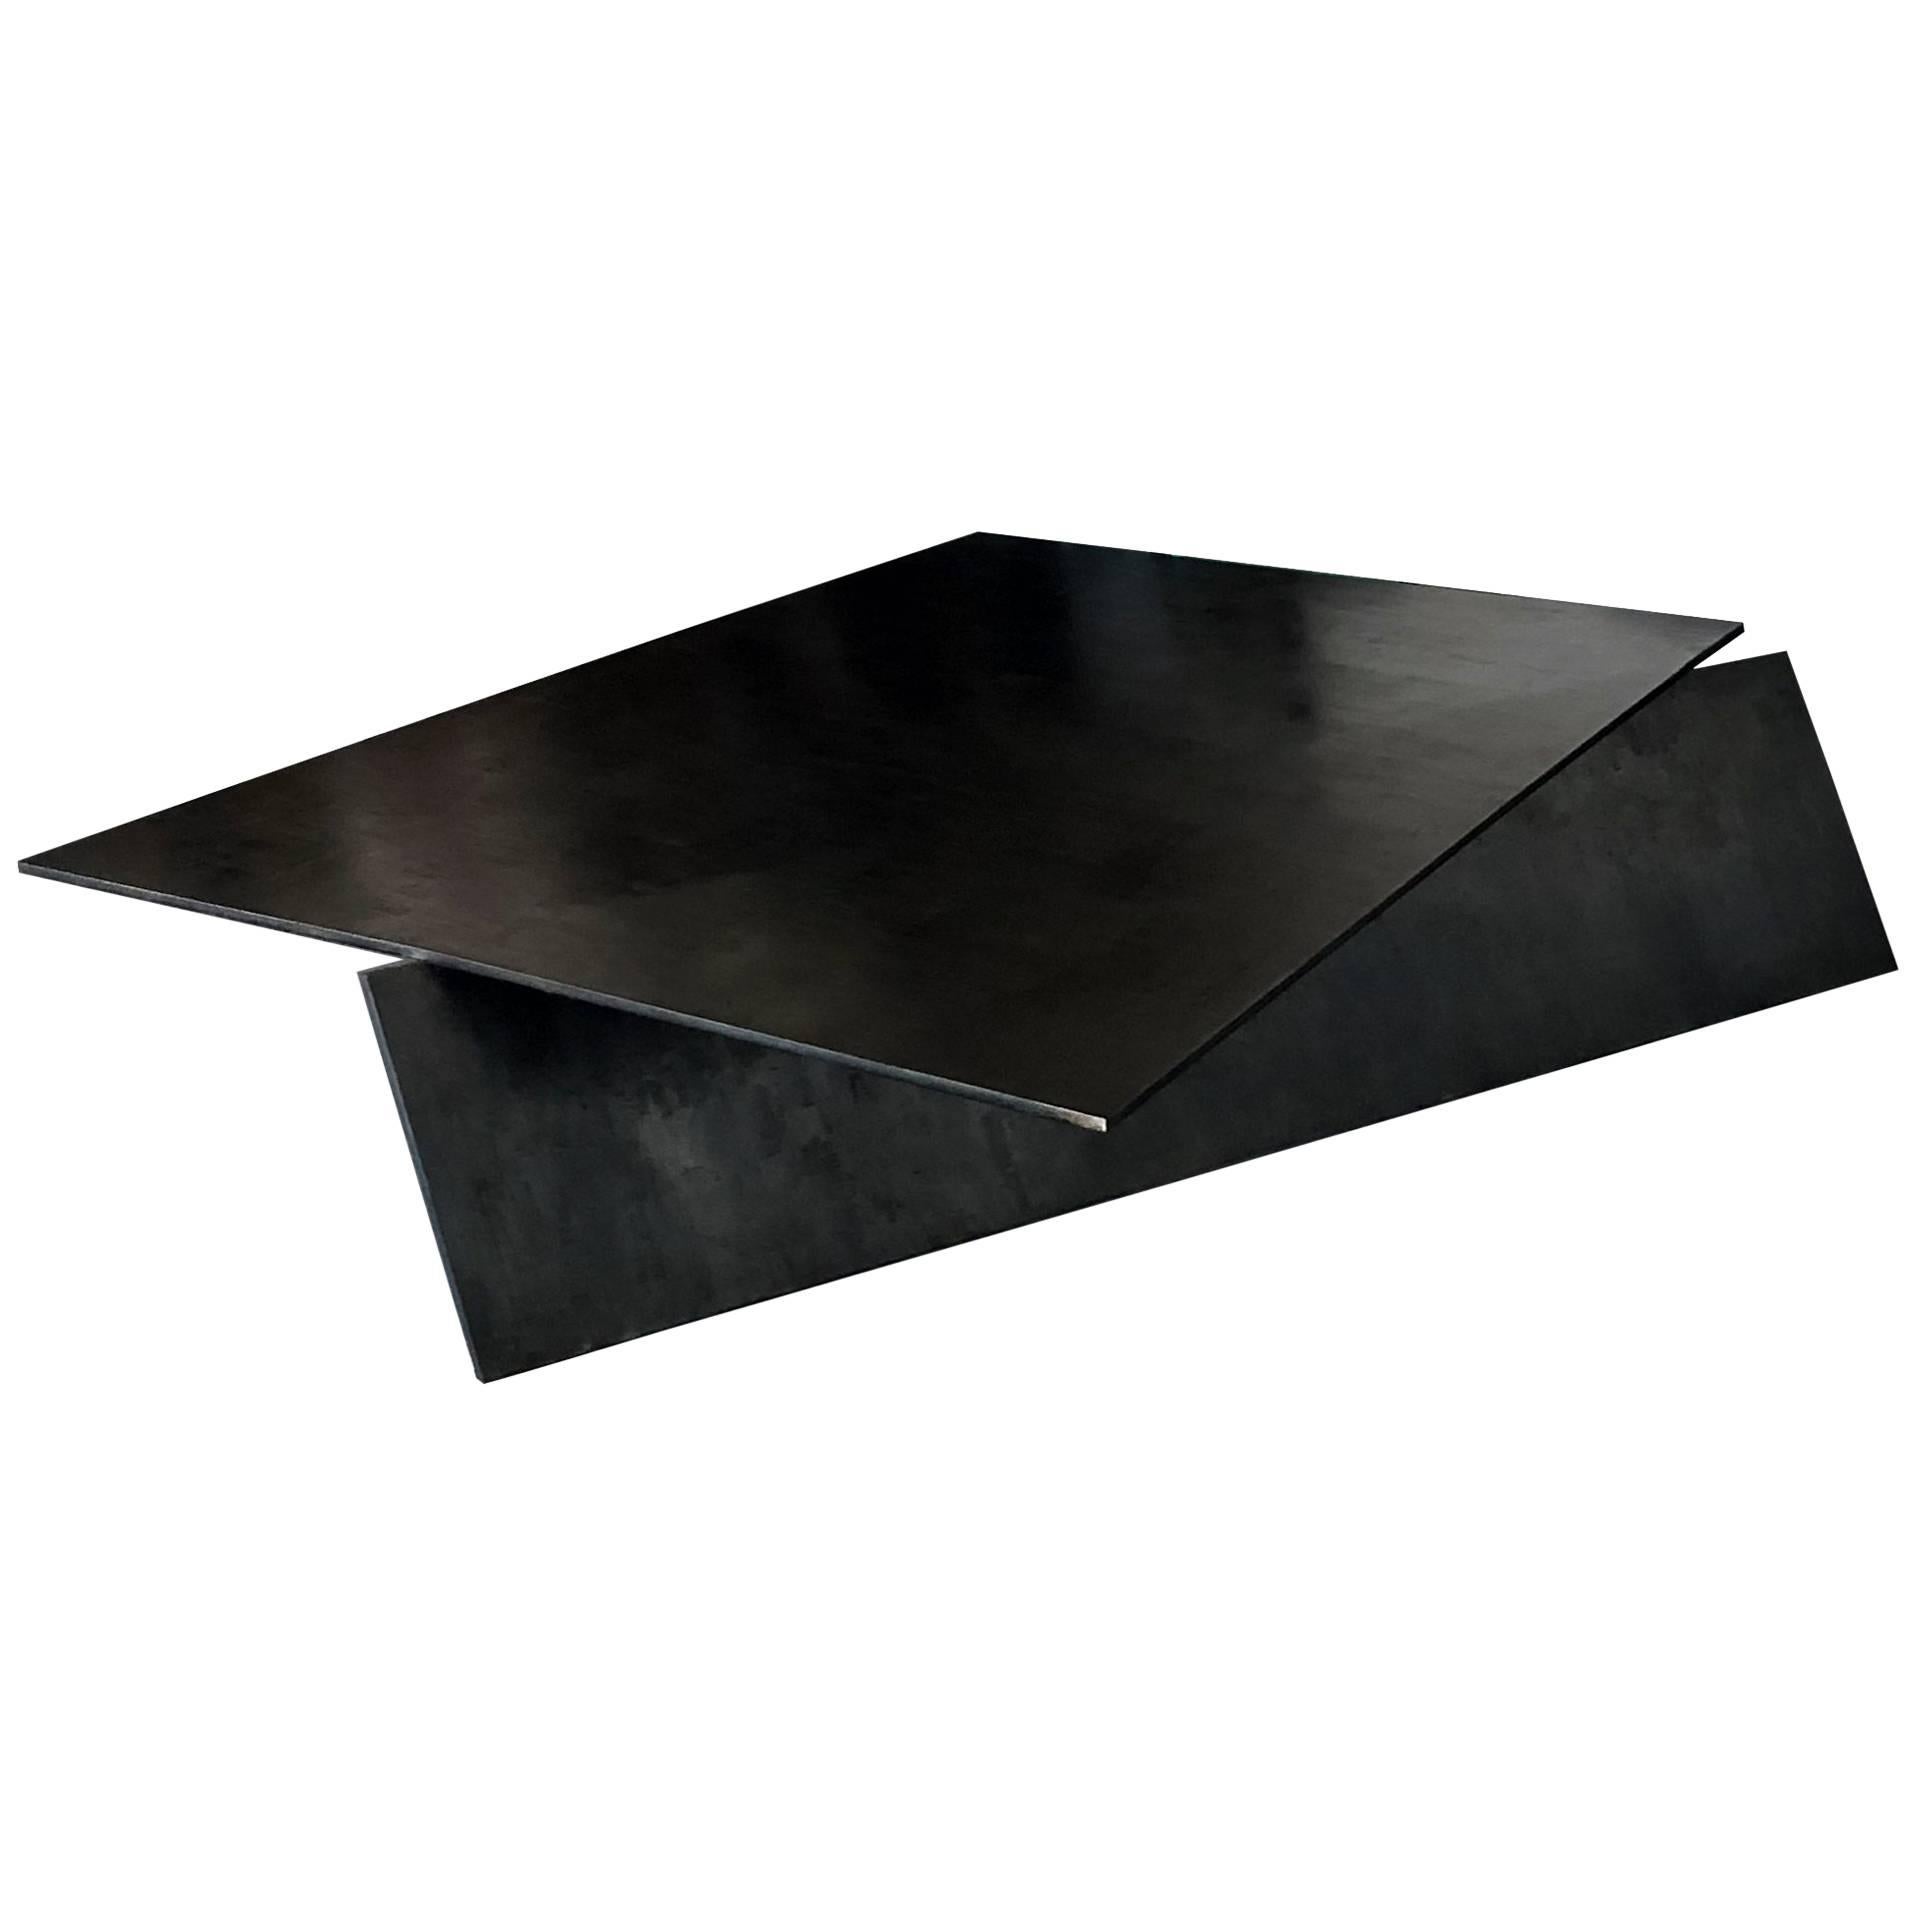 Coffee Table Modern Geometric Planes Angles Balanced Handmade Blackened Steel